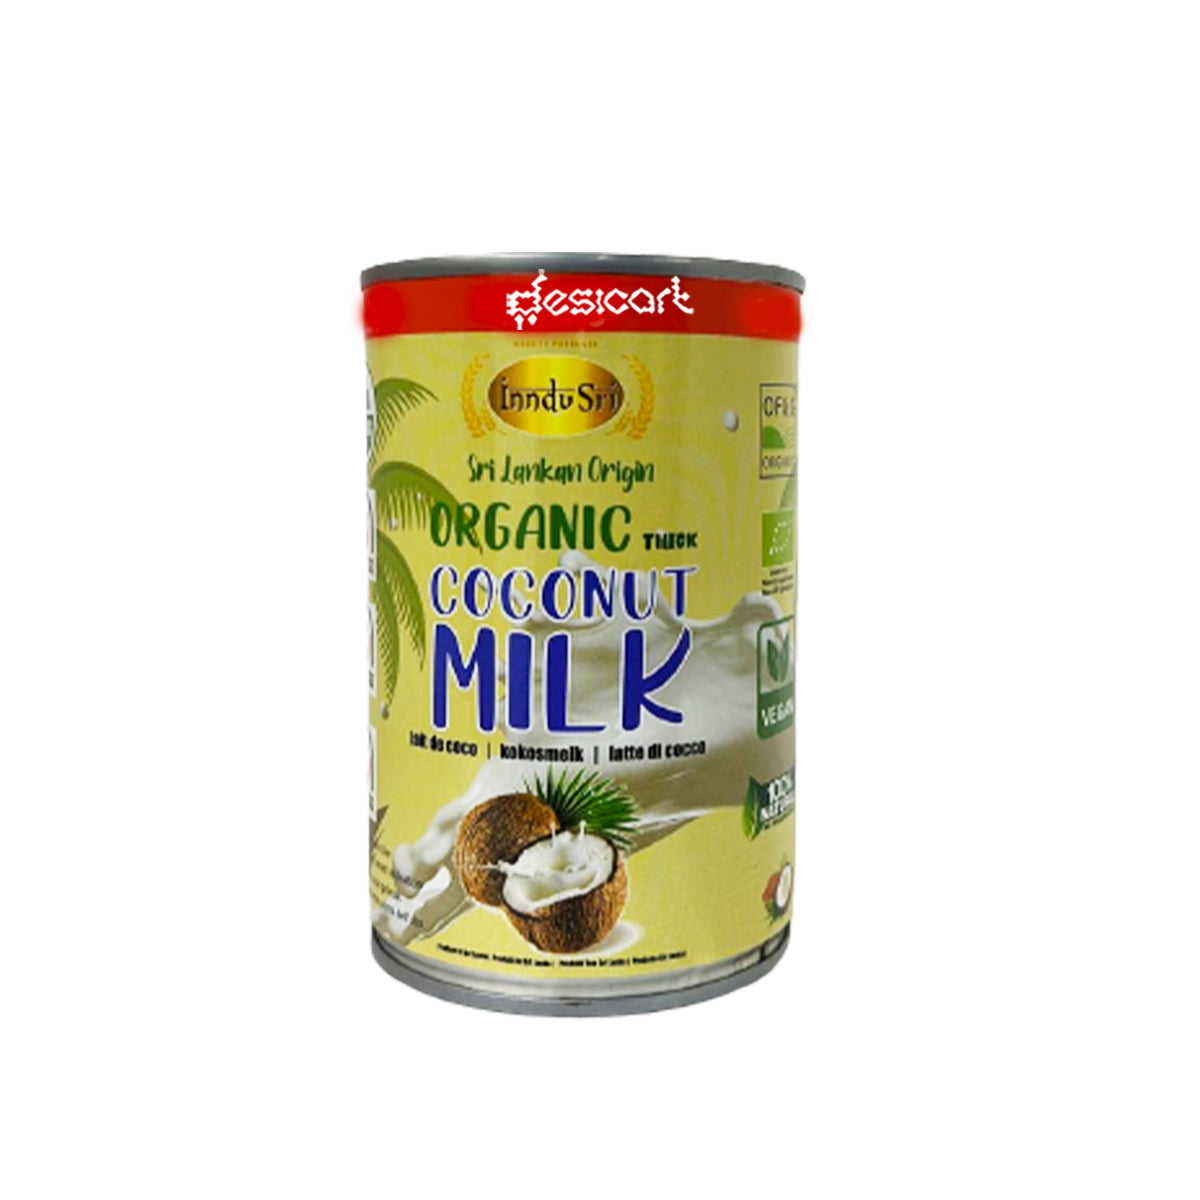 Indu Sri Organic Coconut Milk 400ml